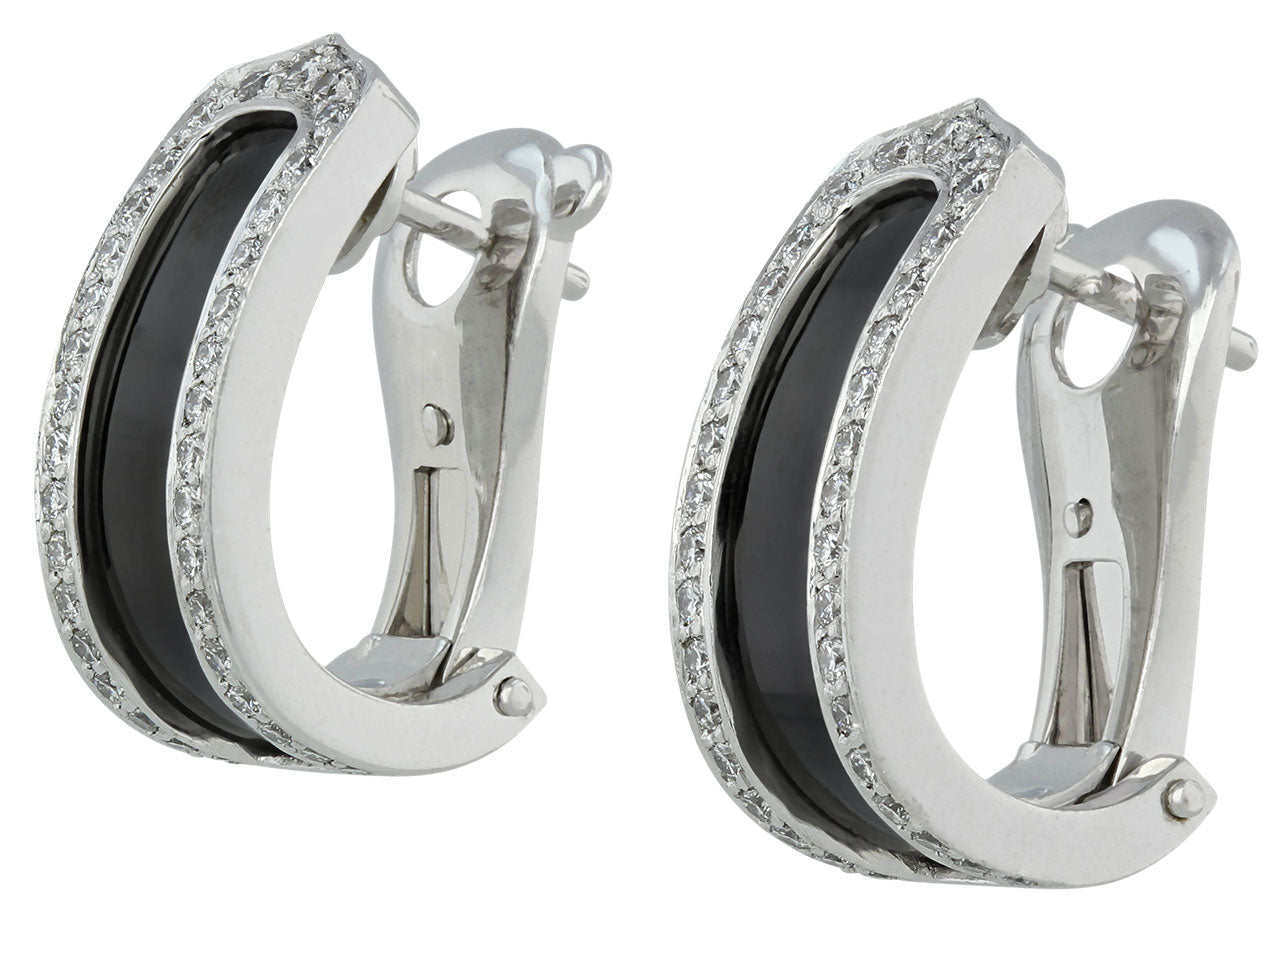 Cartier 'Double C' Black Ceramic and Diamond Earrings in 18K